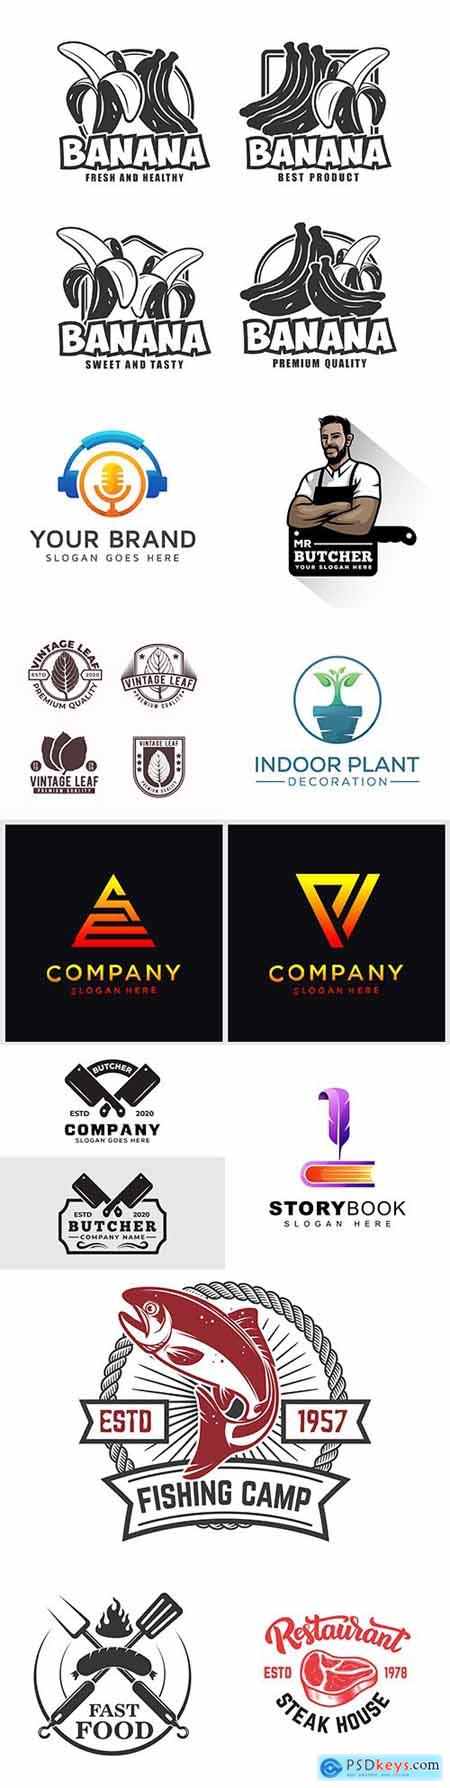 Brand name company logos business corporate design 42